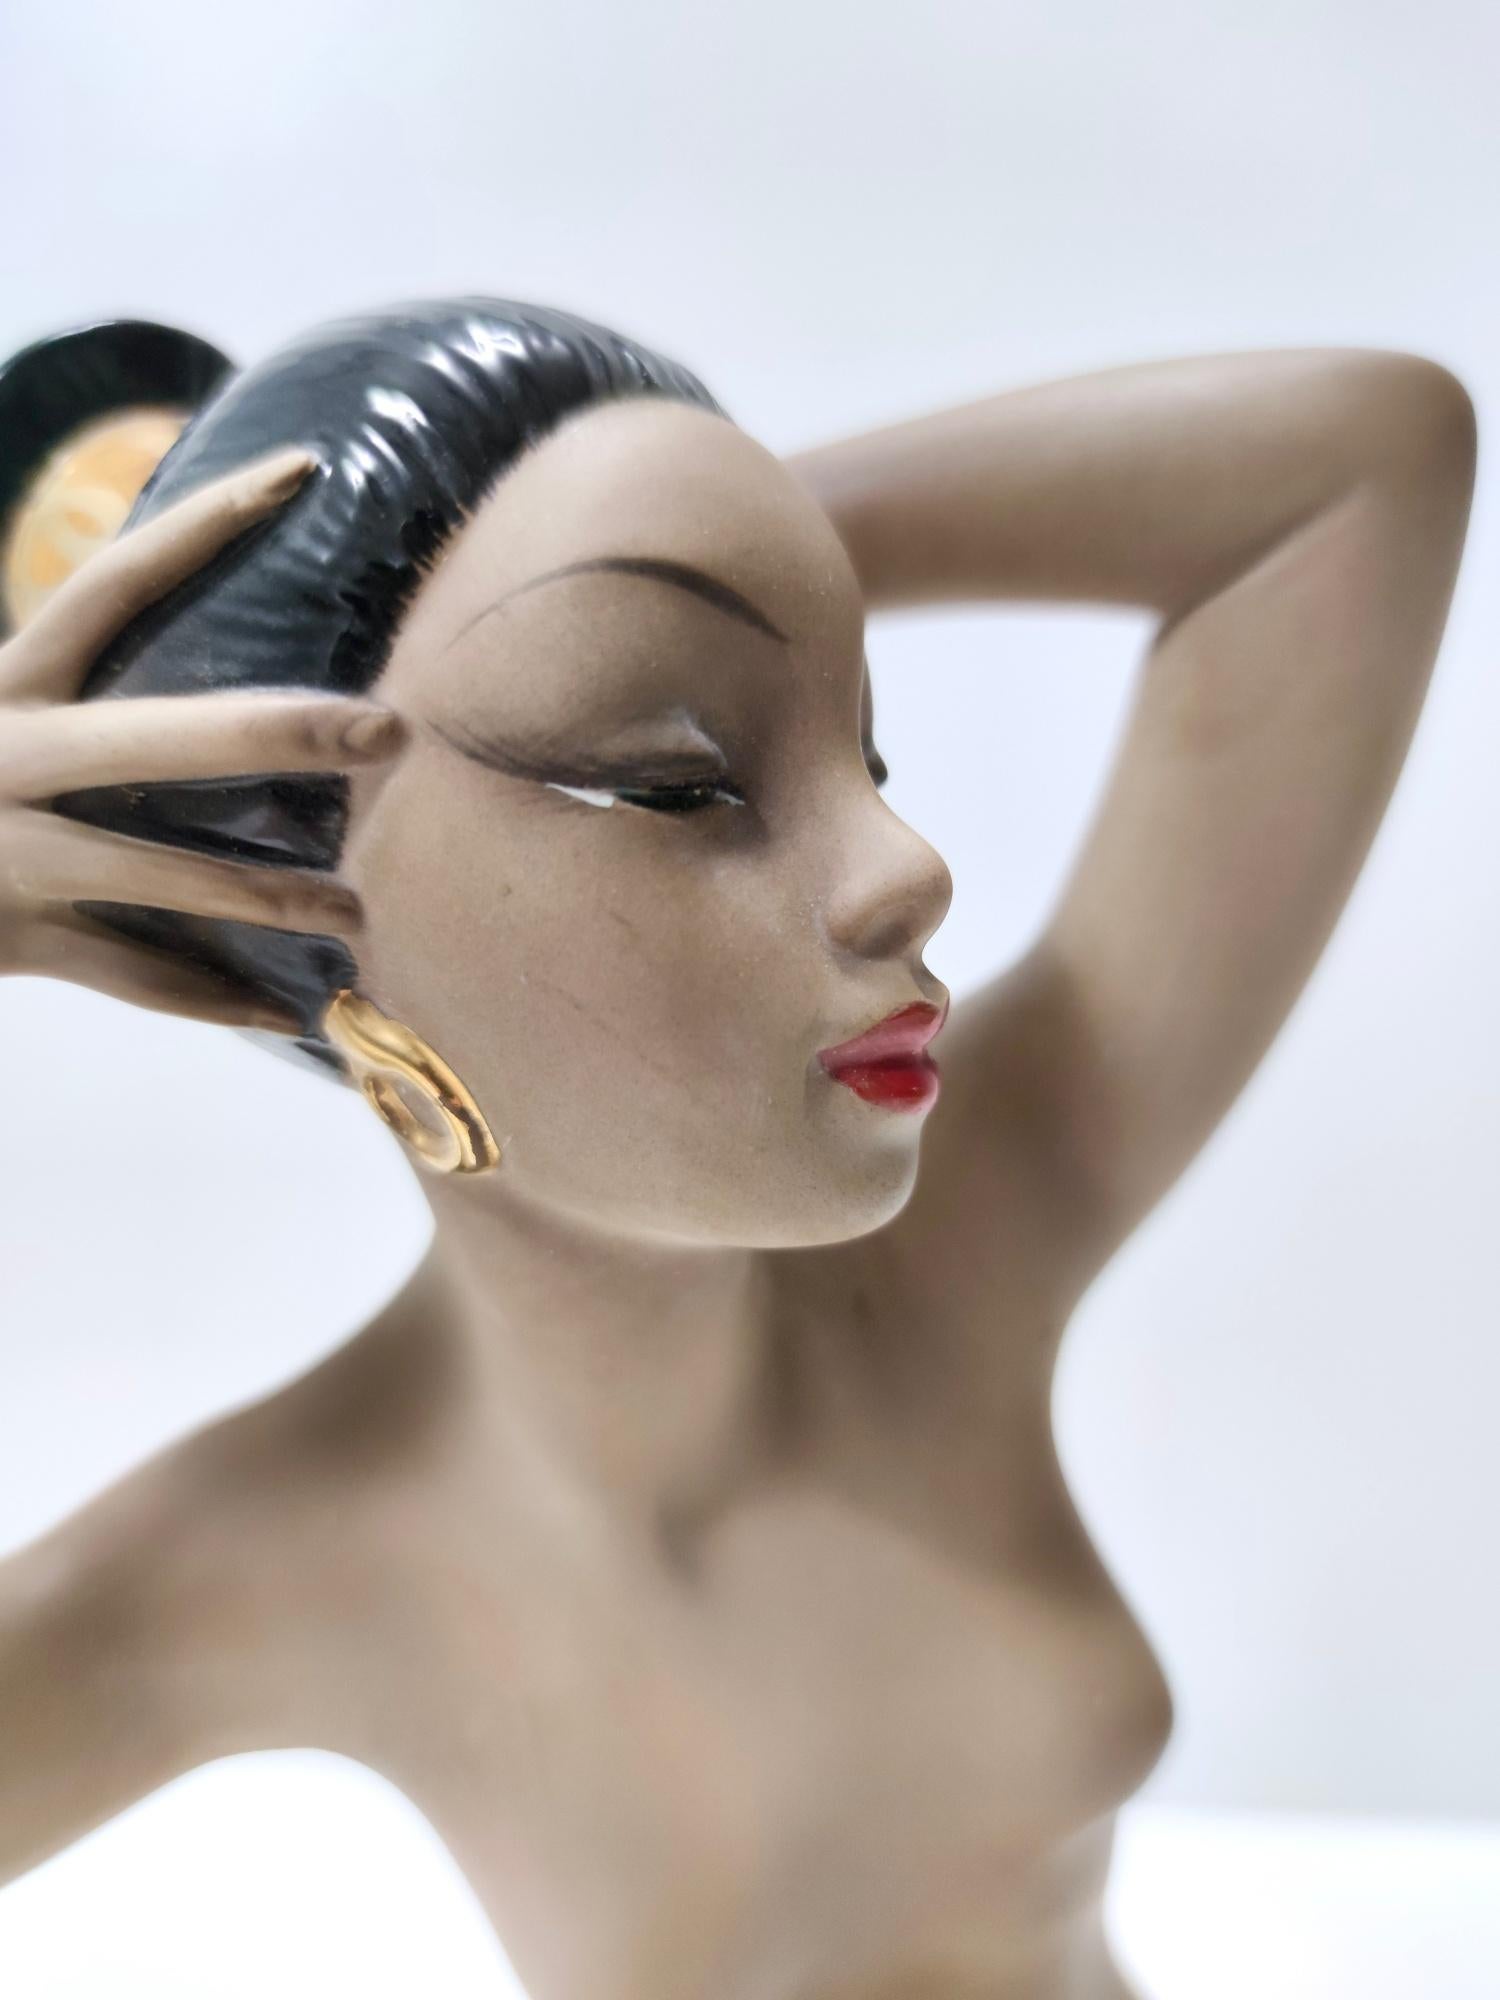  Art Deco Glazed Ceramic Woman Figure by Cia Manna Mod 